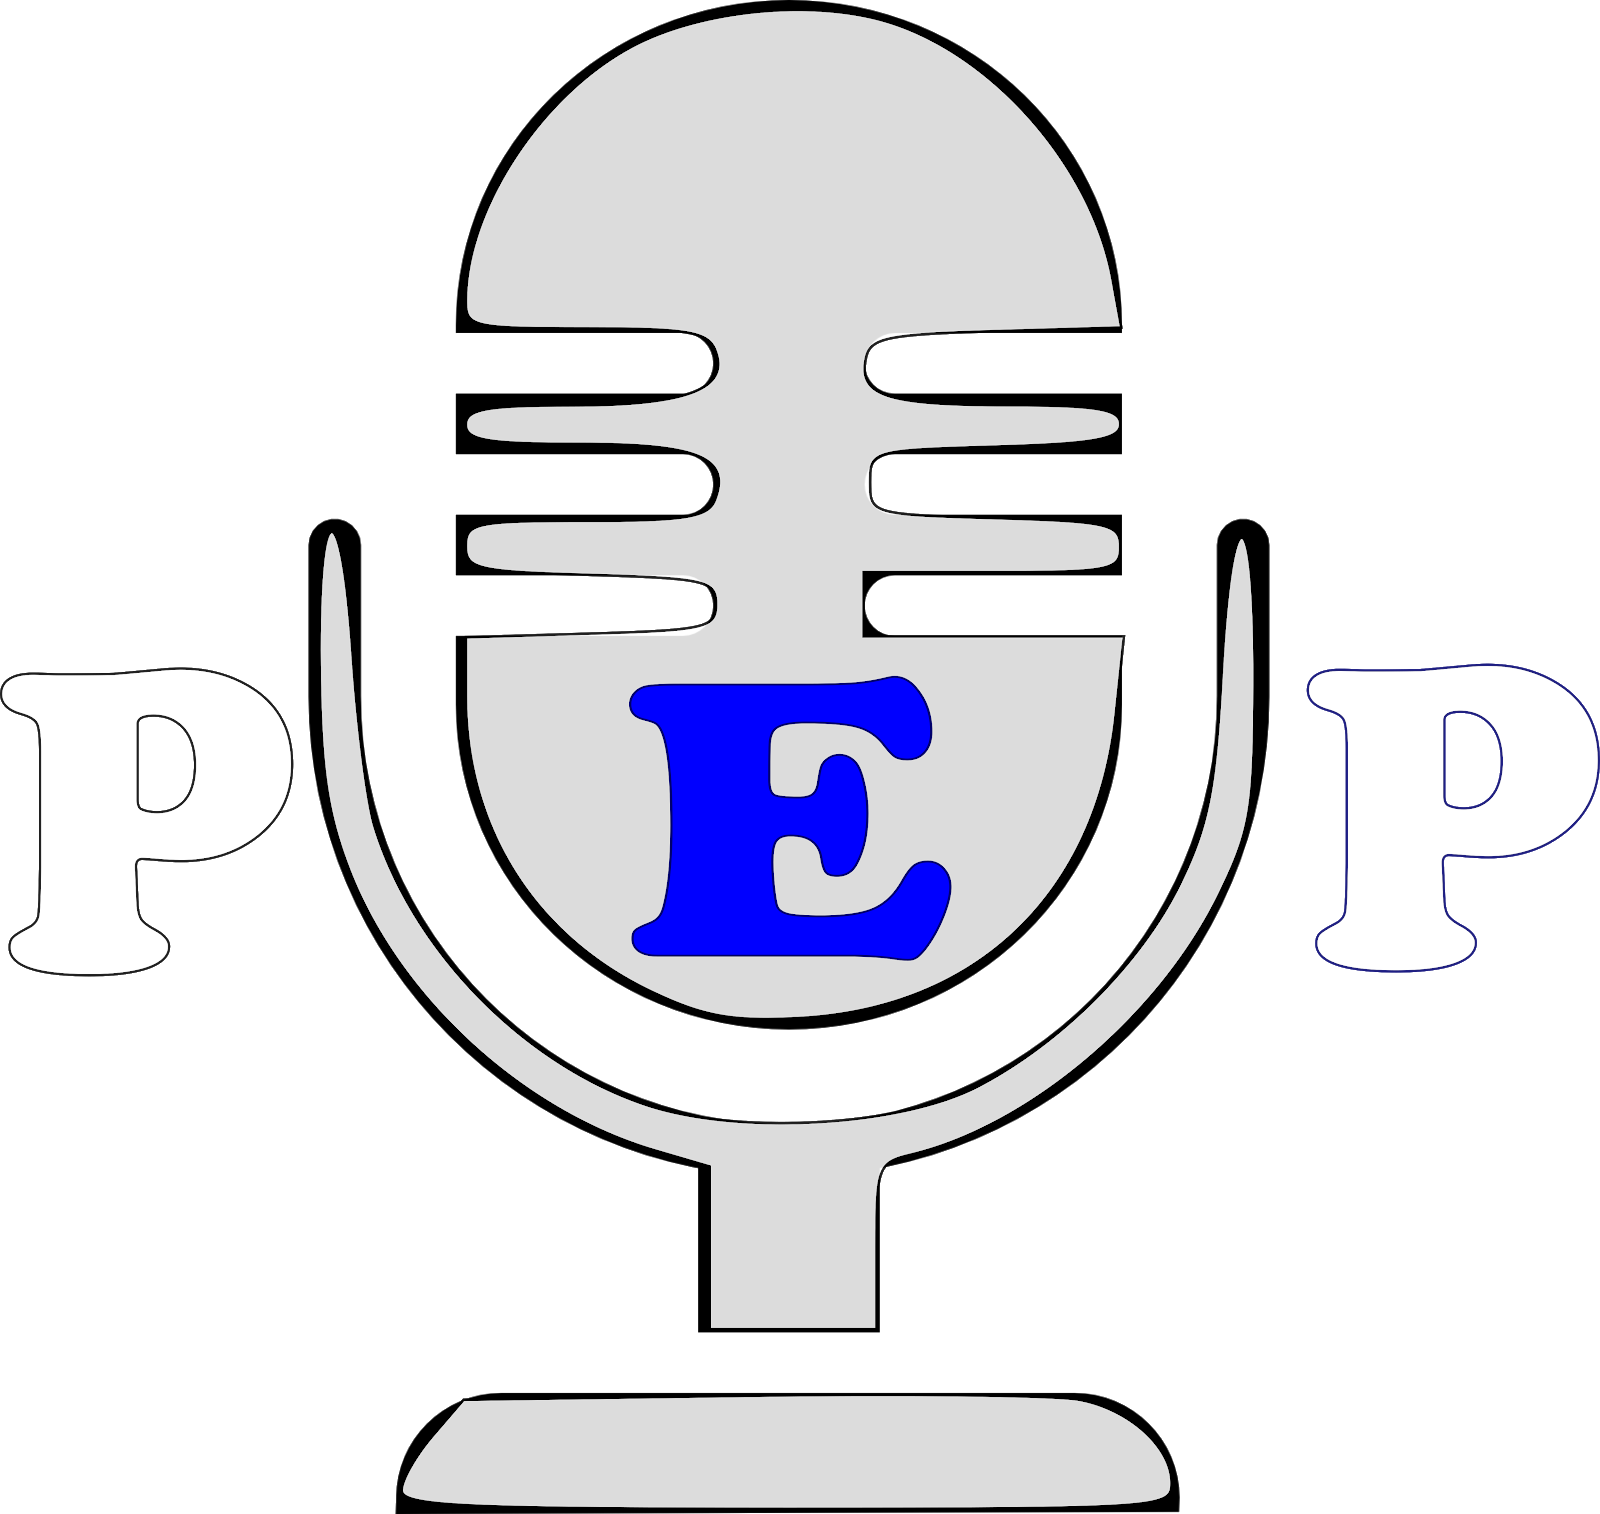 PEP - Palestra Esporte Podcast